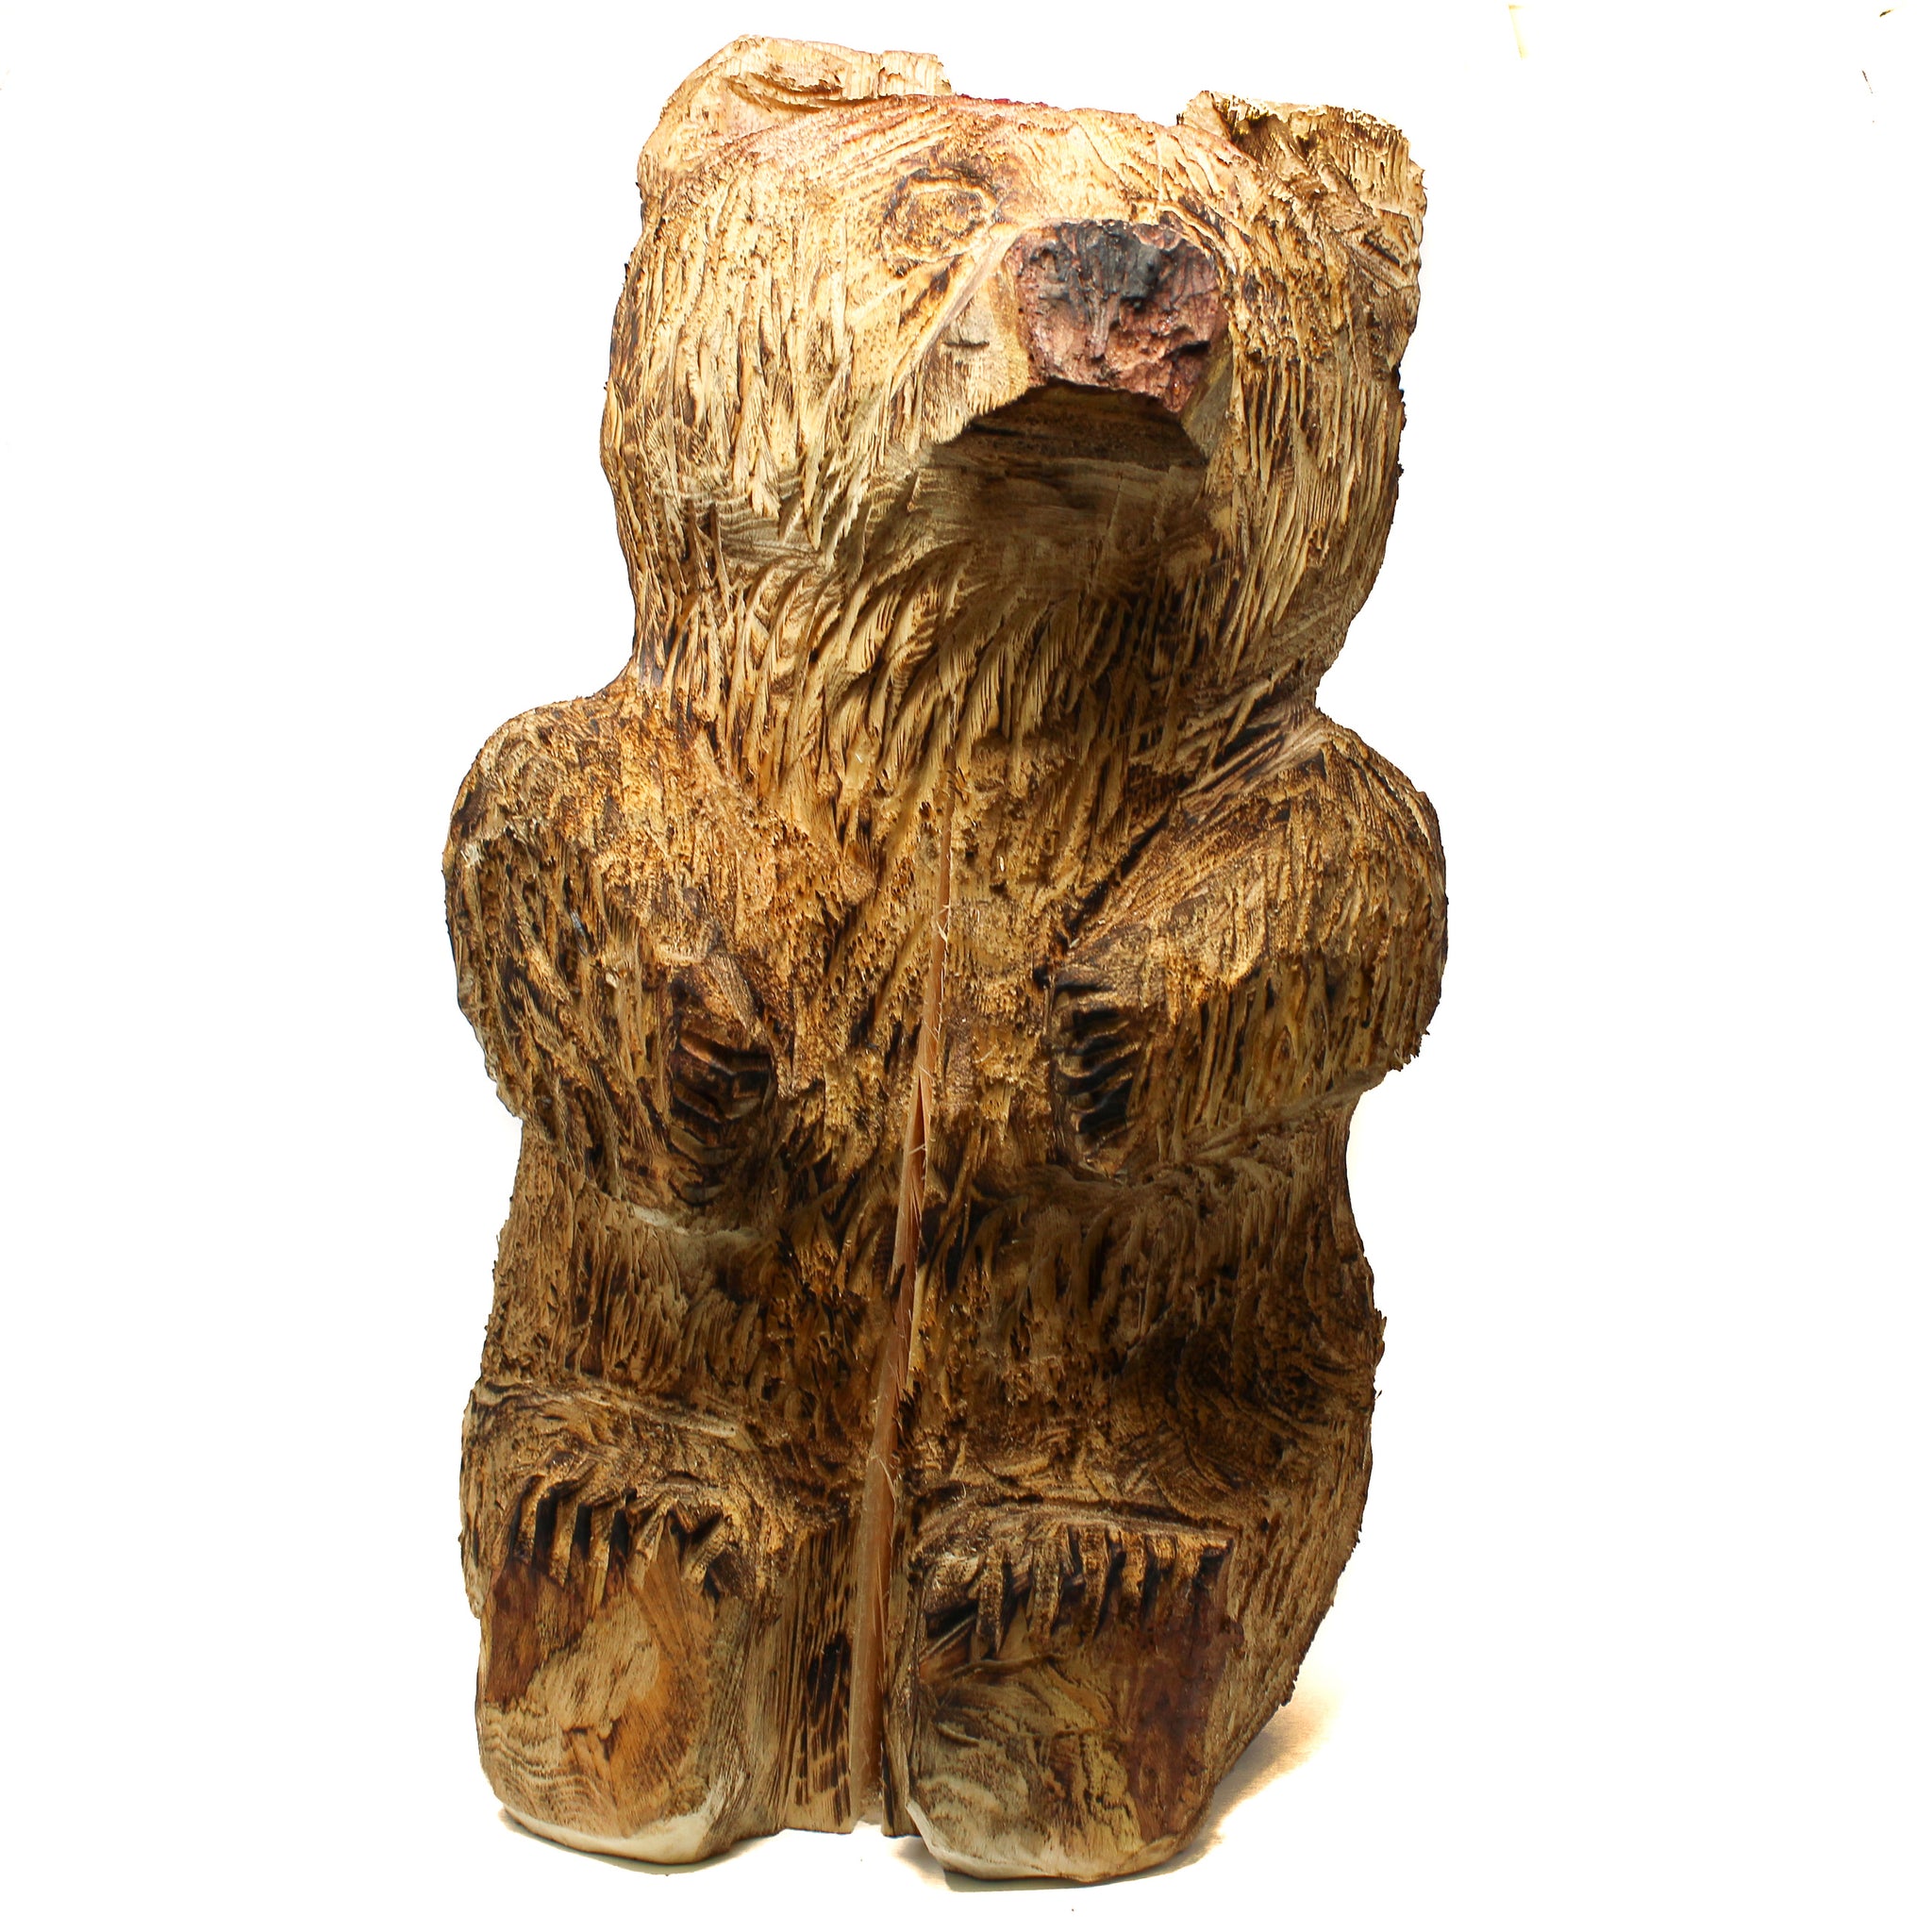 Little bear wood carving